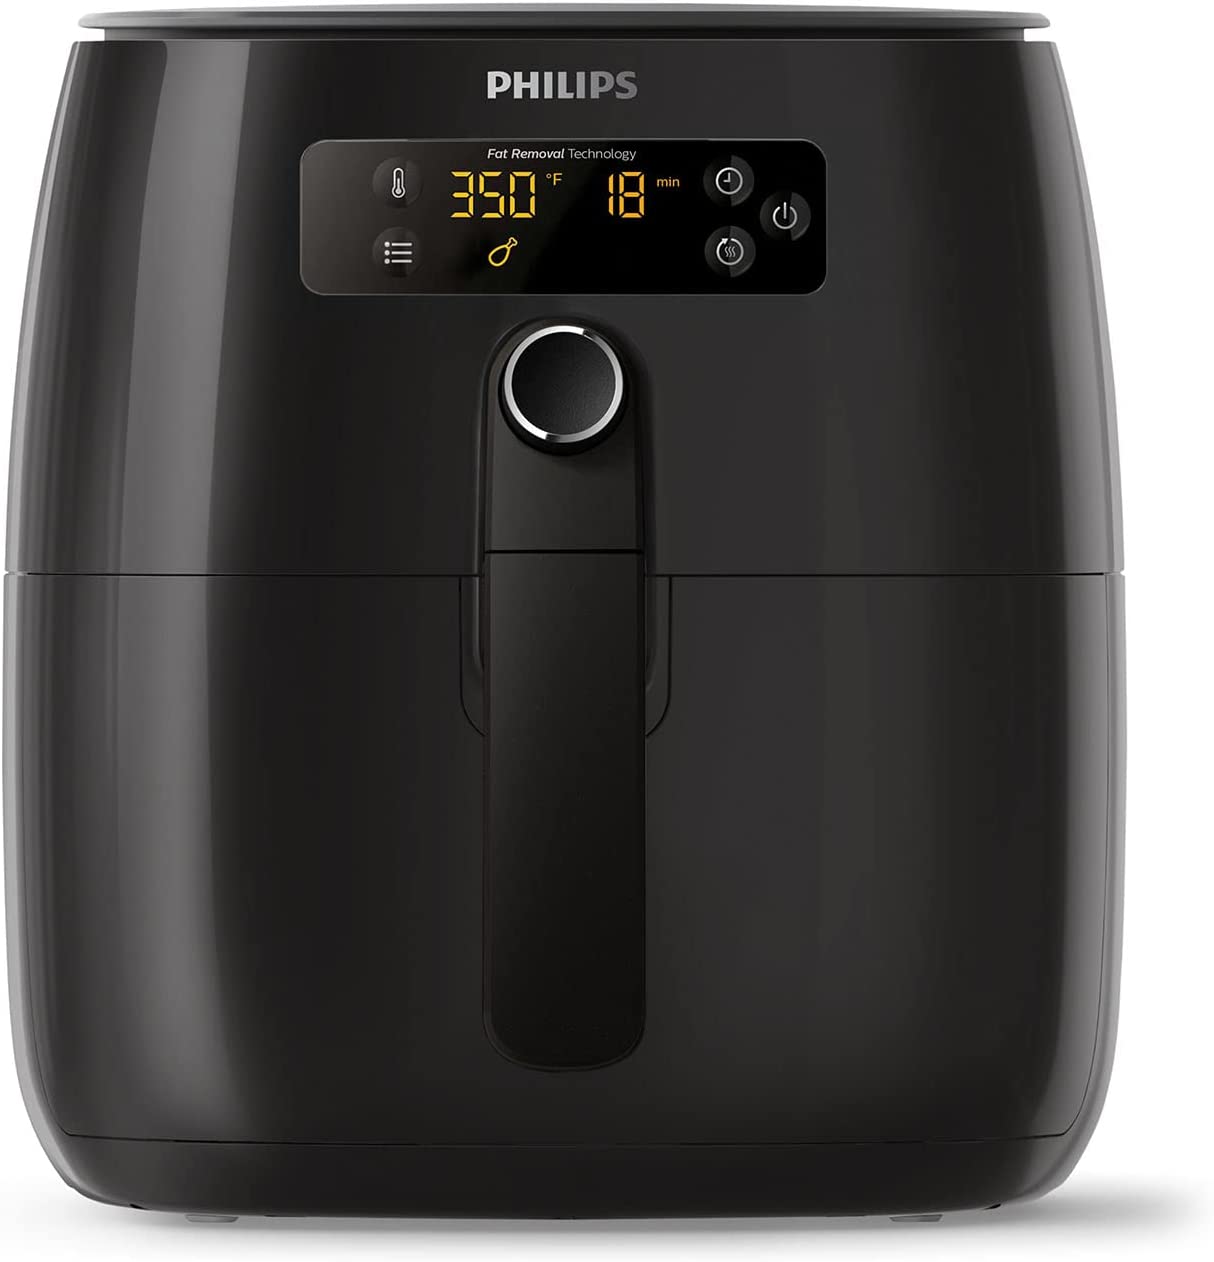 Philips HD9641 96 Digital Display Low-Fat Air Fryer, 3-Quart